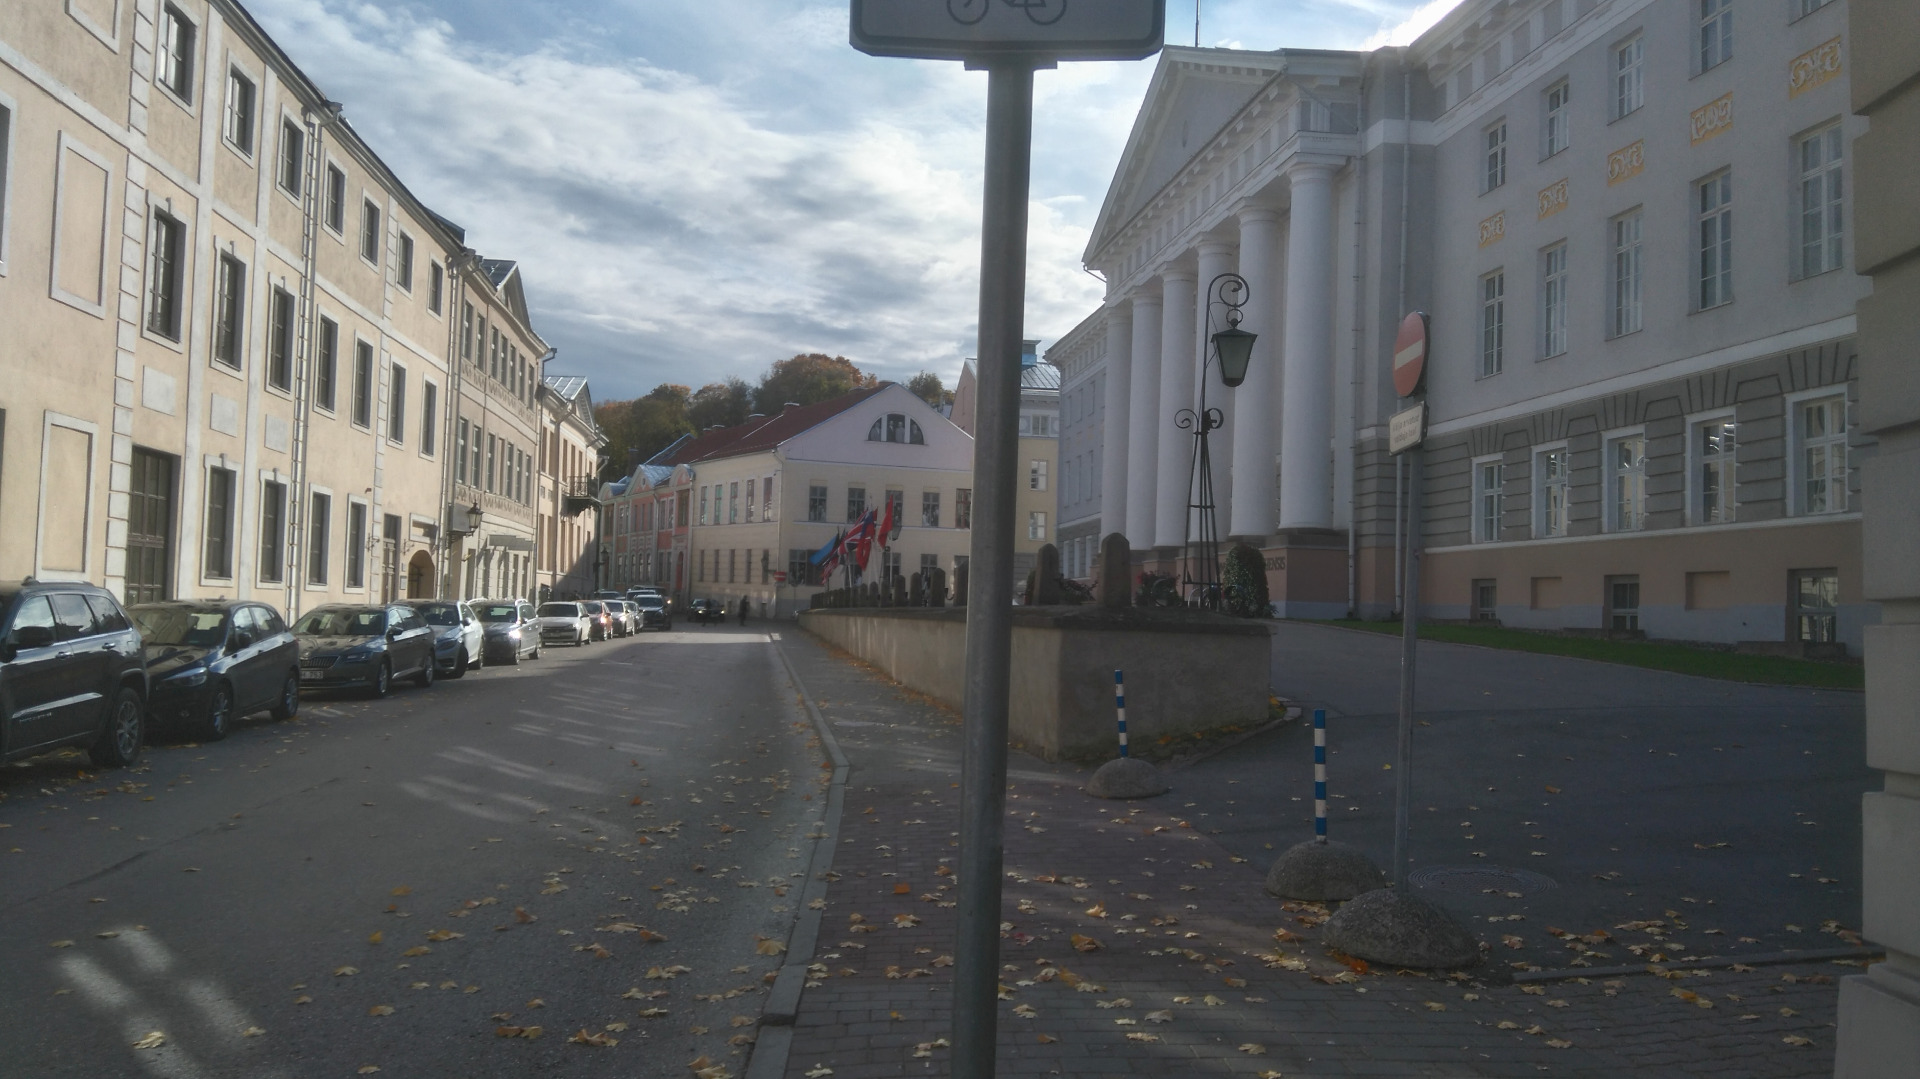 Poliklinica of the University of Tartu rephoto